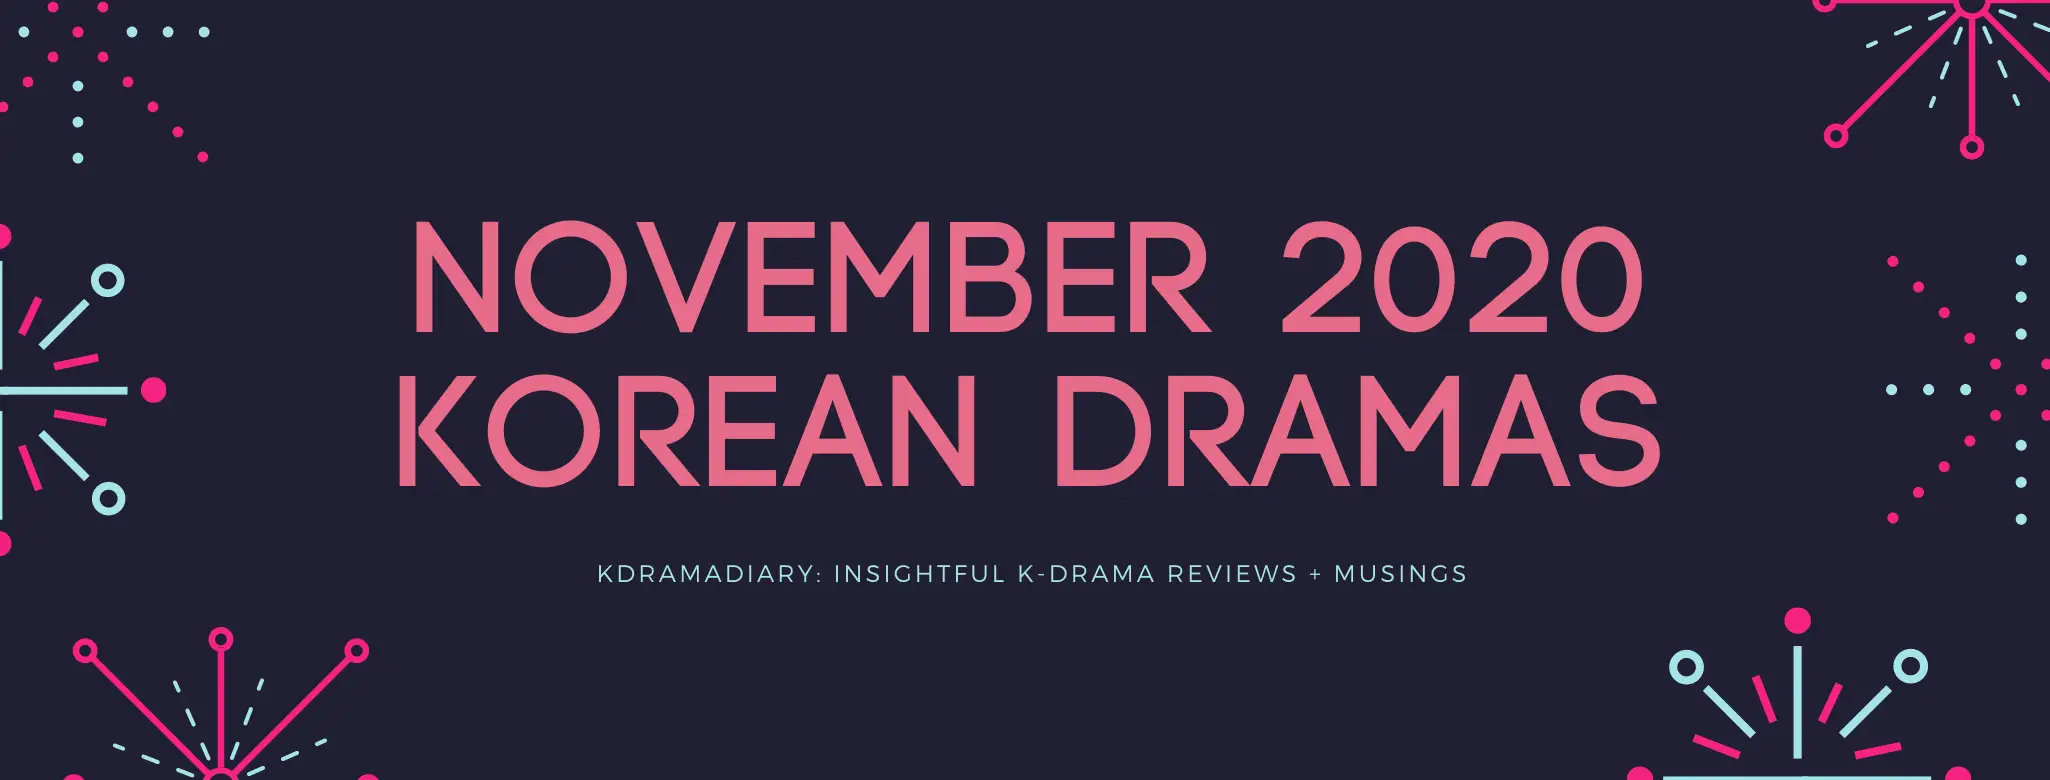 November 2020 Korean Dramas